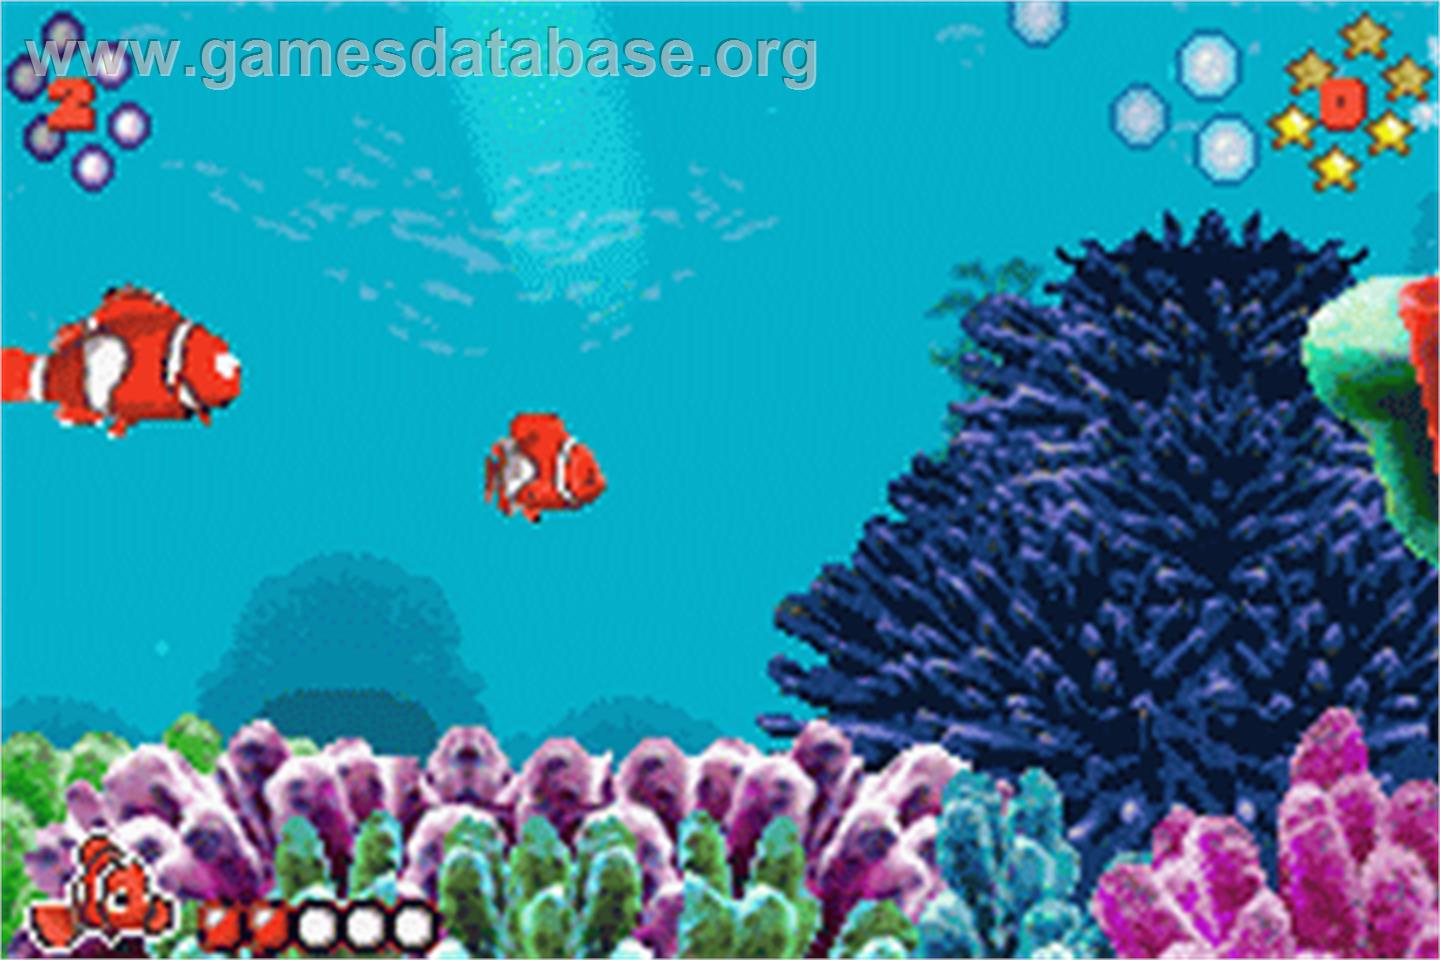 Finding Nemo - Nintendo Game Boy Advance - Artwork - In Game